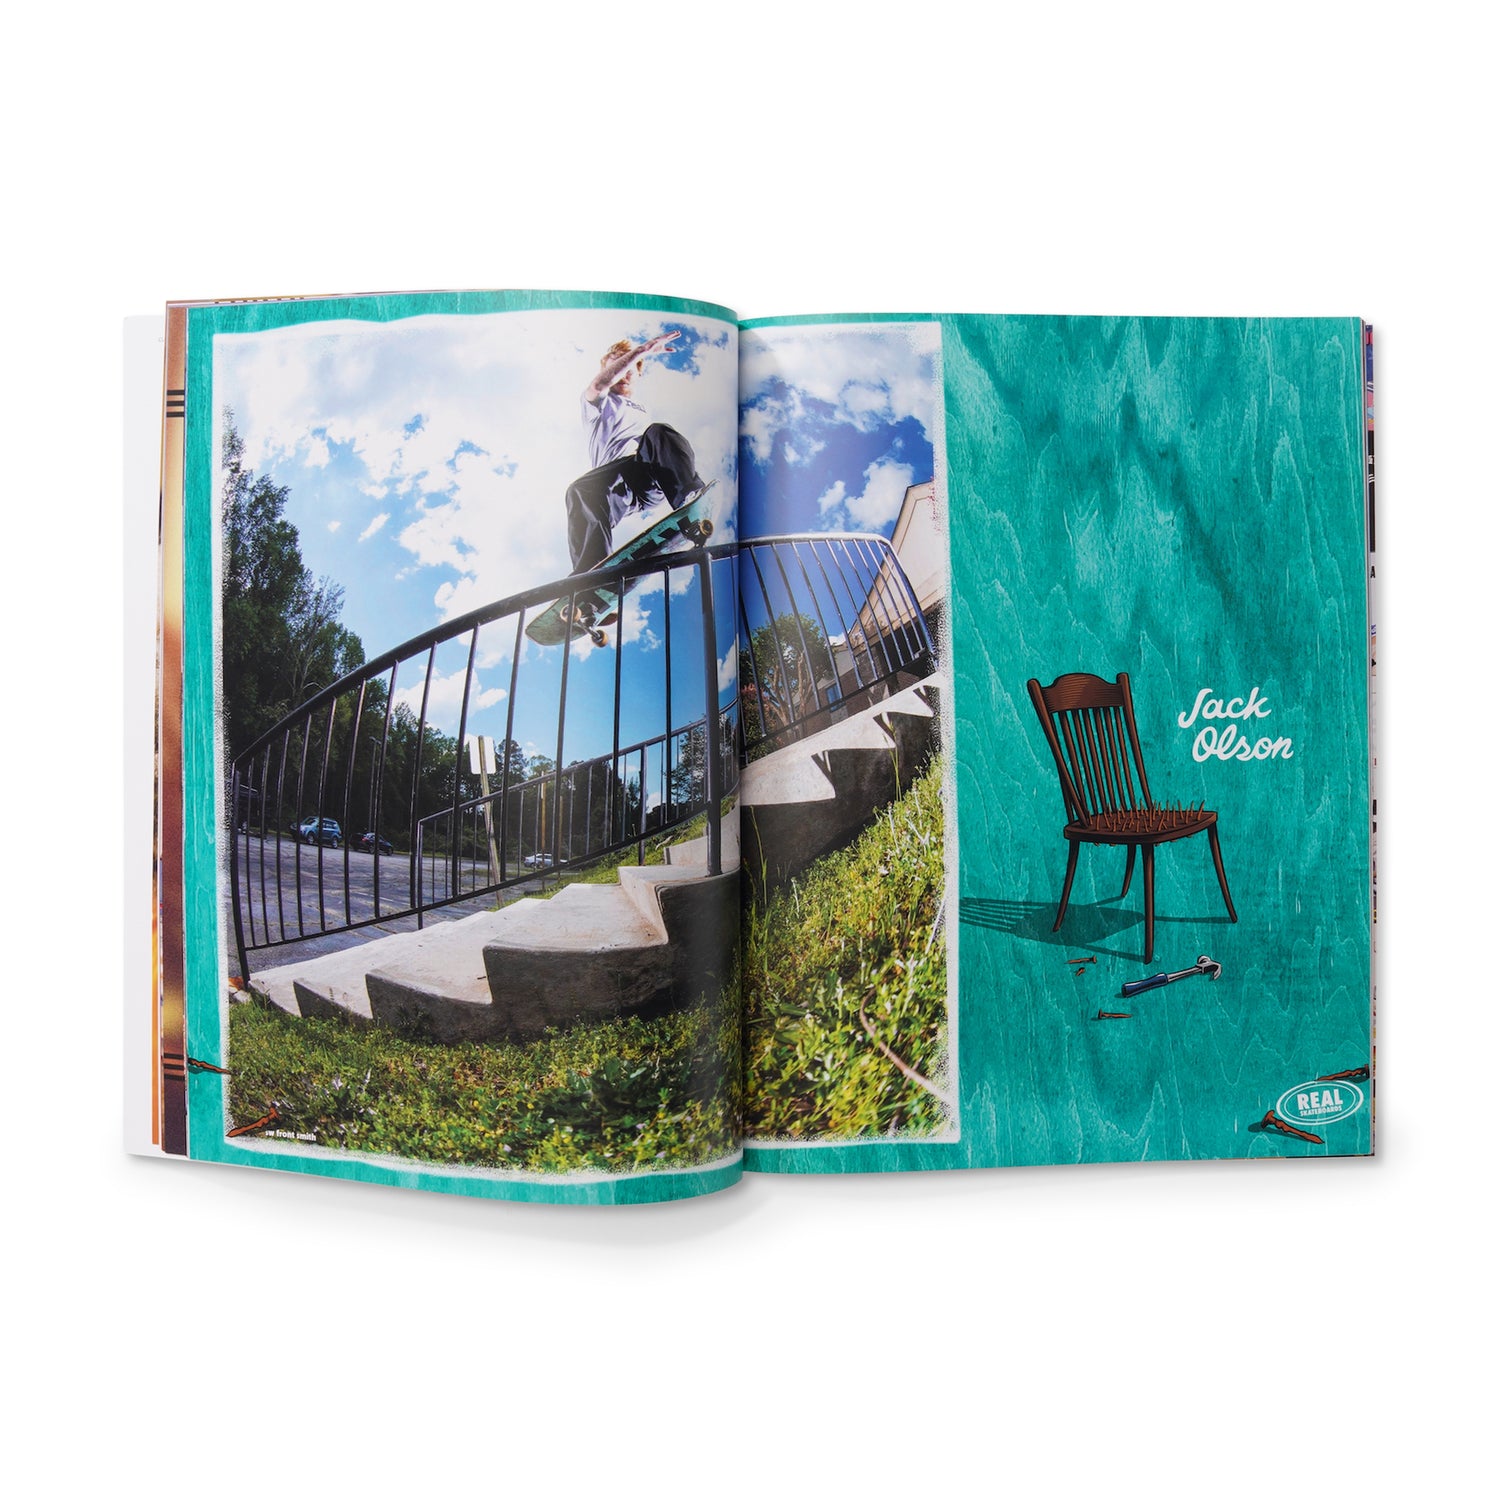 Closer Skate Magazine - Volume 1 Issue 2